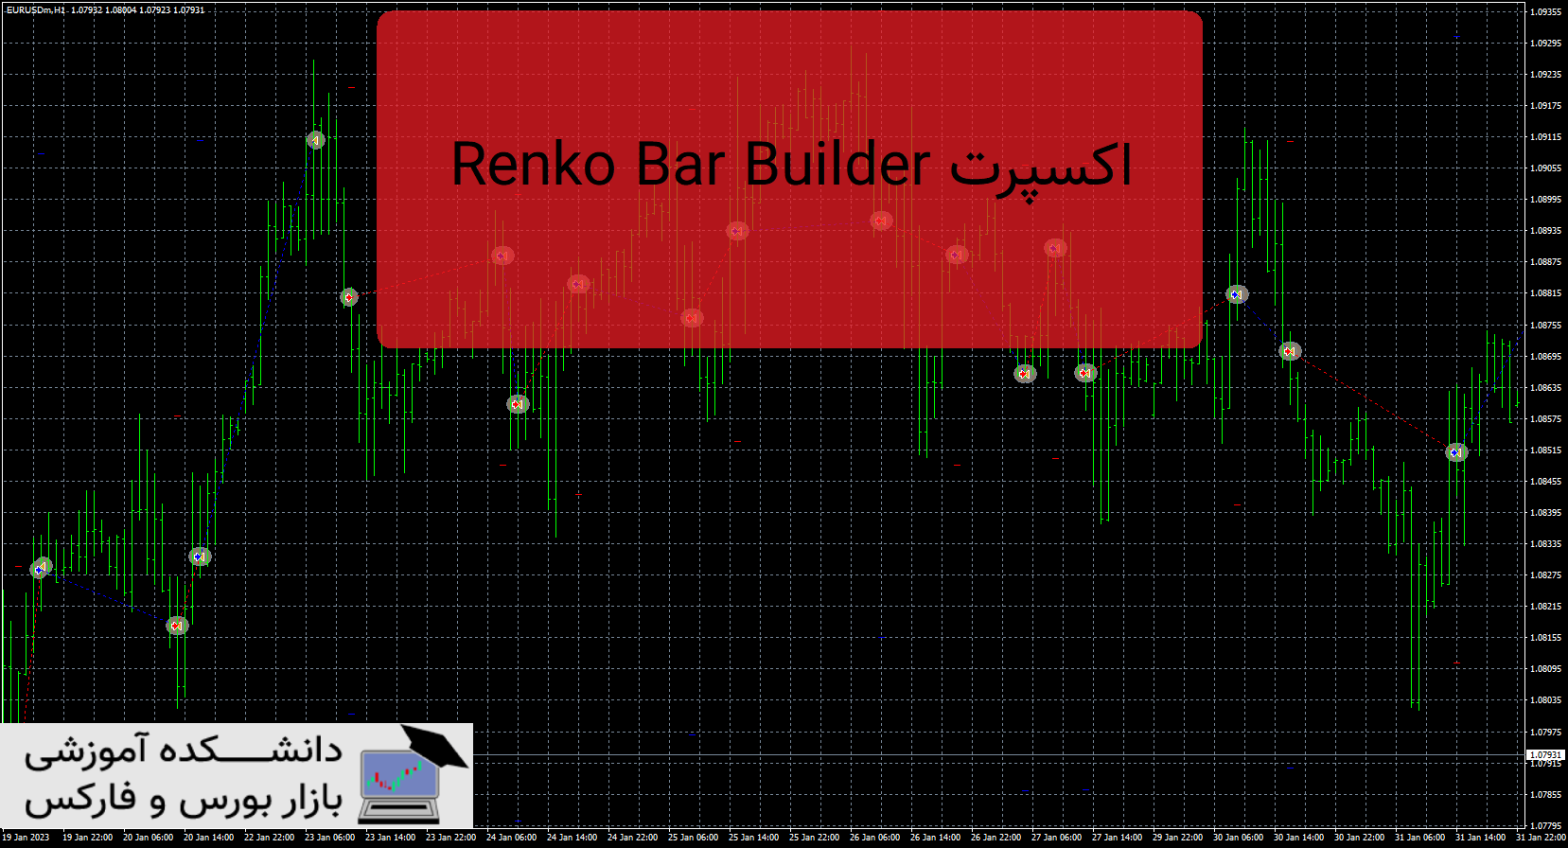 Renko Bar Builder دانلود و معرفی اکسپرت